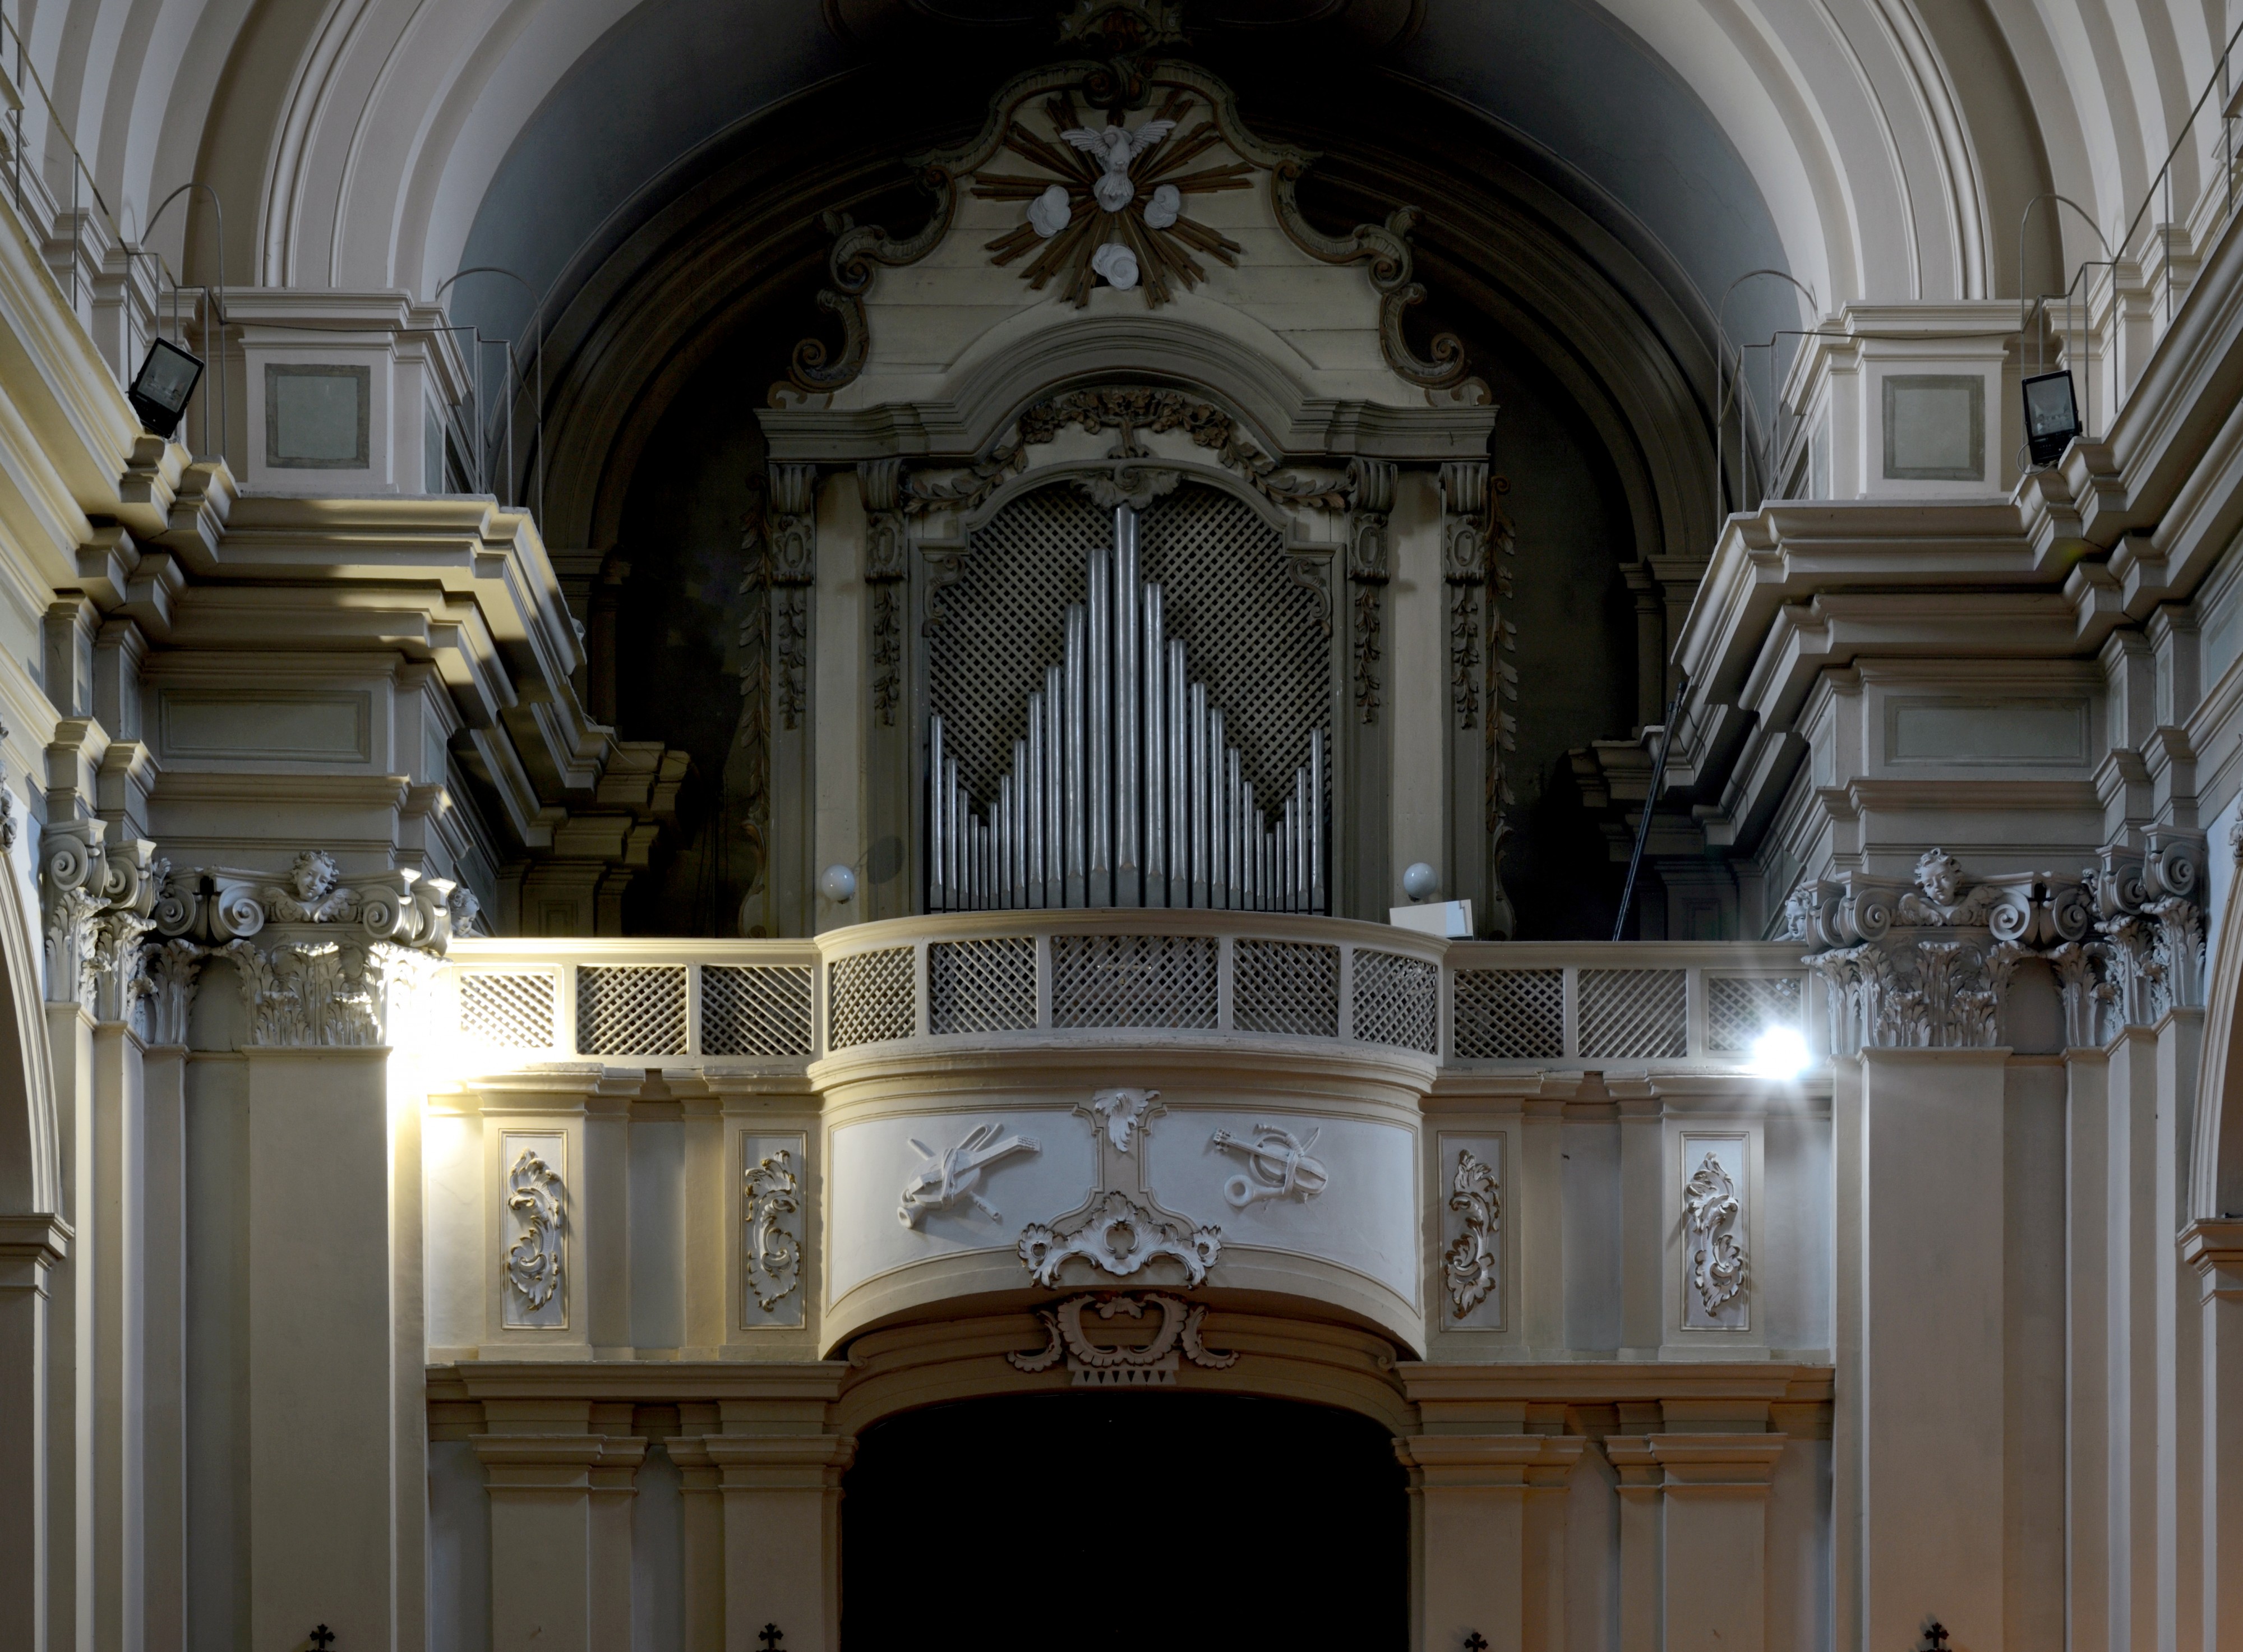 Pipe organ in St. Francis in Amelia